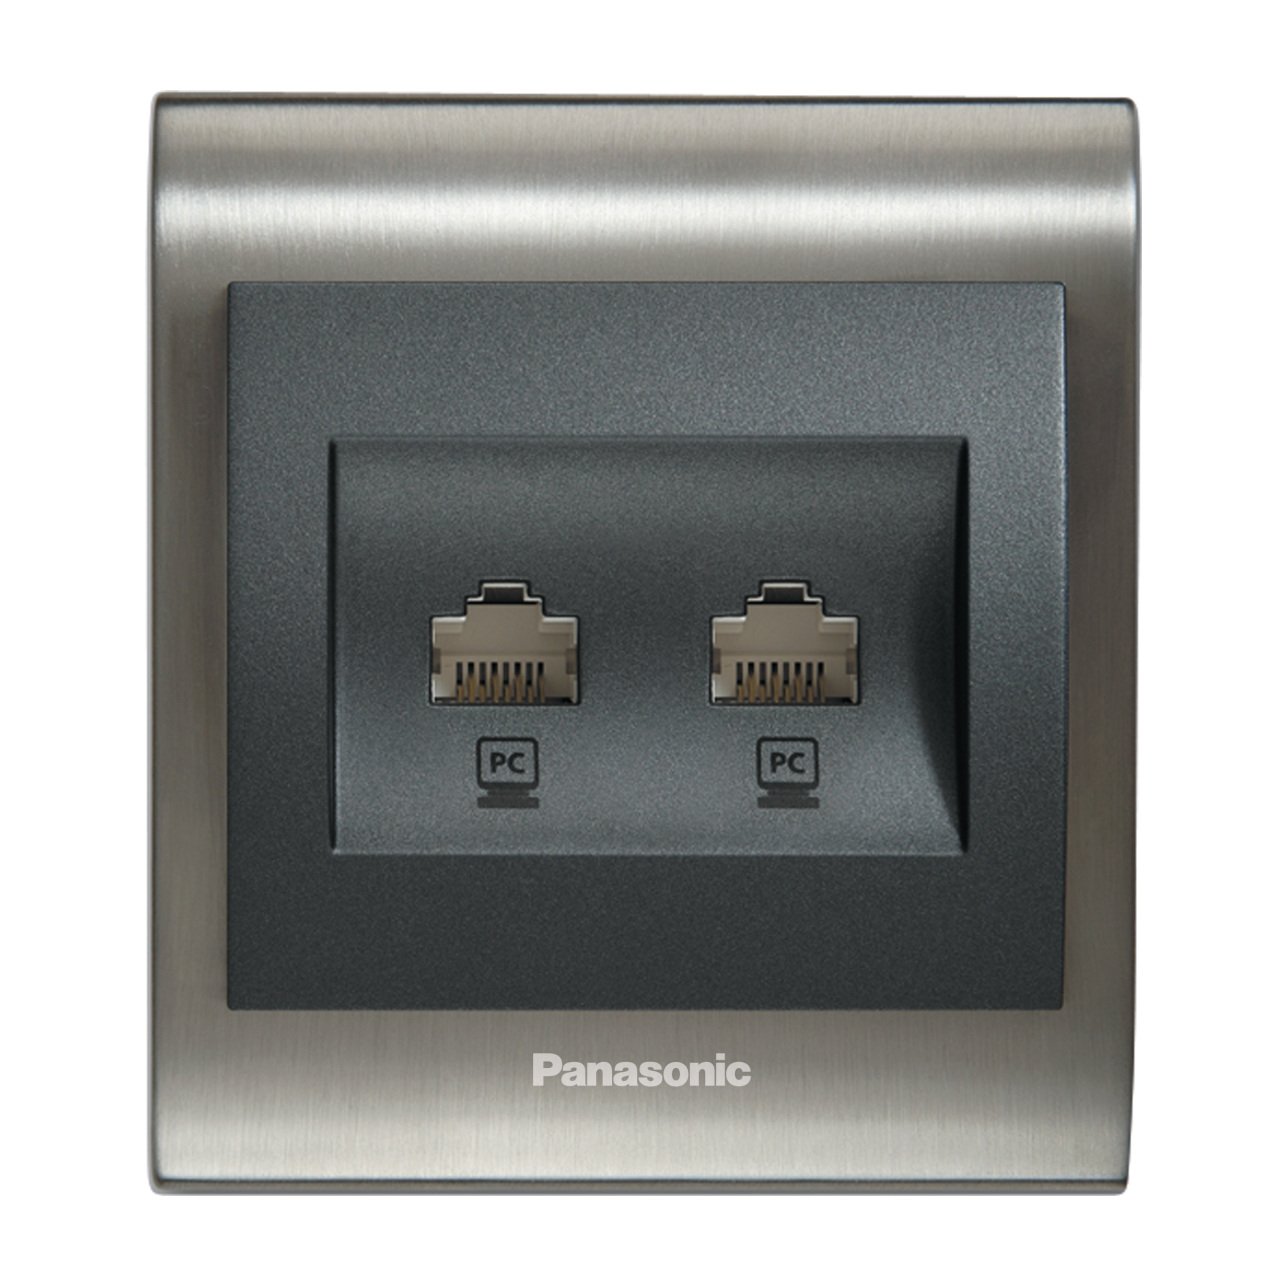 Viko Panasonic Thea Blu Inox Füme İkili Data Prizi Cat-6